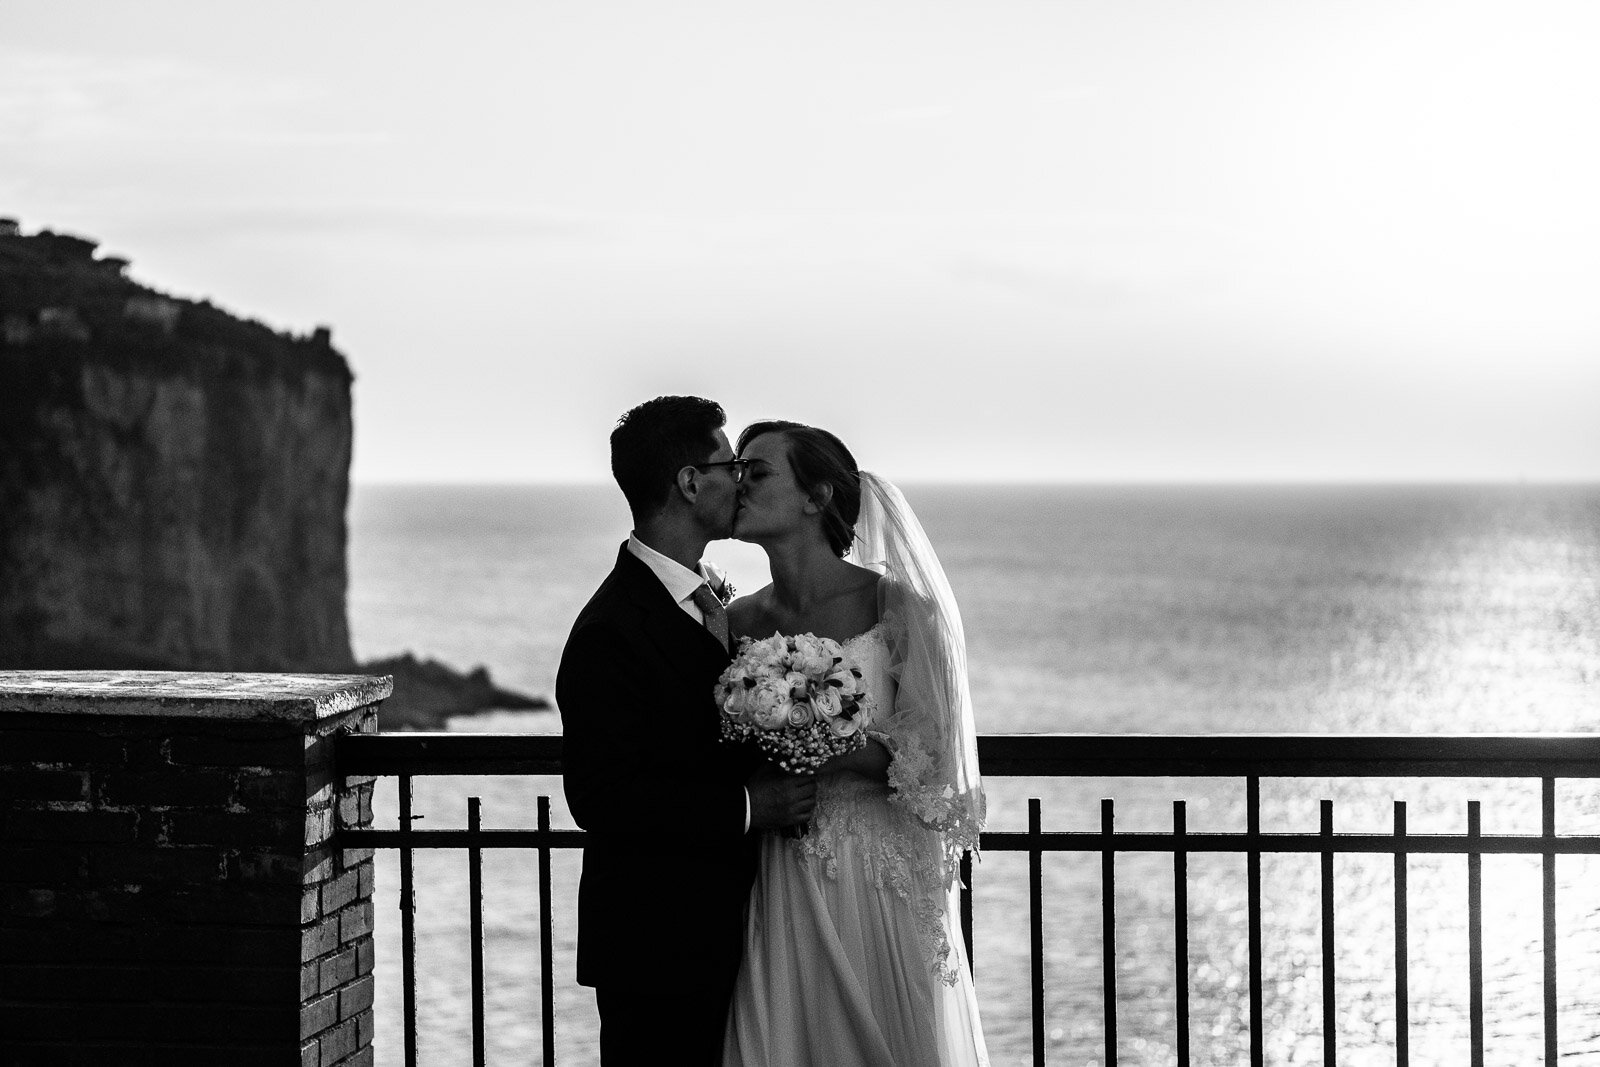 00020-Fotografo-Matrimonio-VicoEquense-fotografo-Sorrento-Napoli-Wedding-Amalfi-Coast-Photographer-VincentAiello.jpg